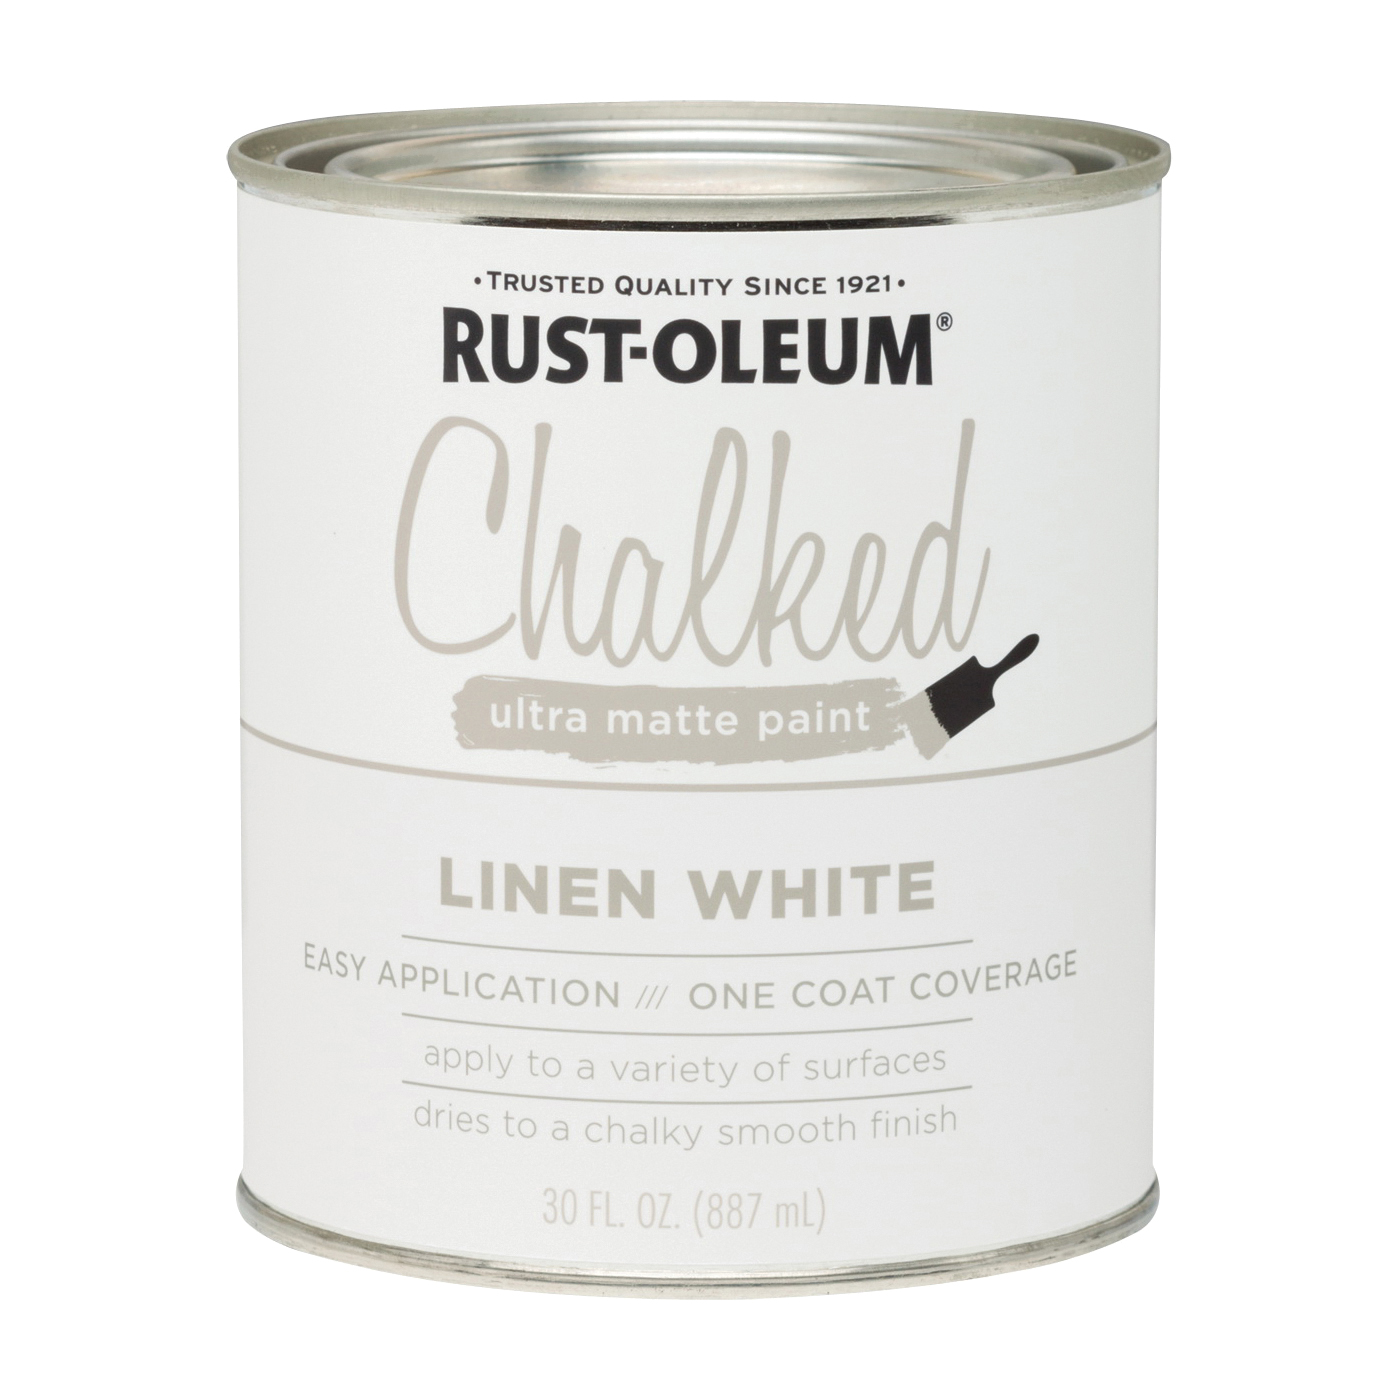 285140 Chalk Paint, Ultra Matte, Linen White, 30 oz